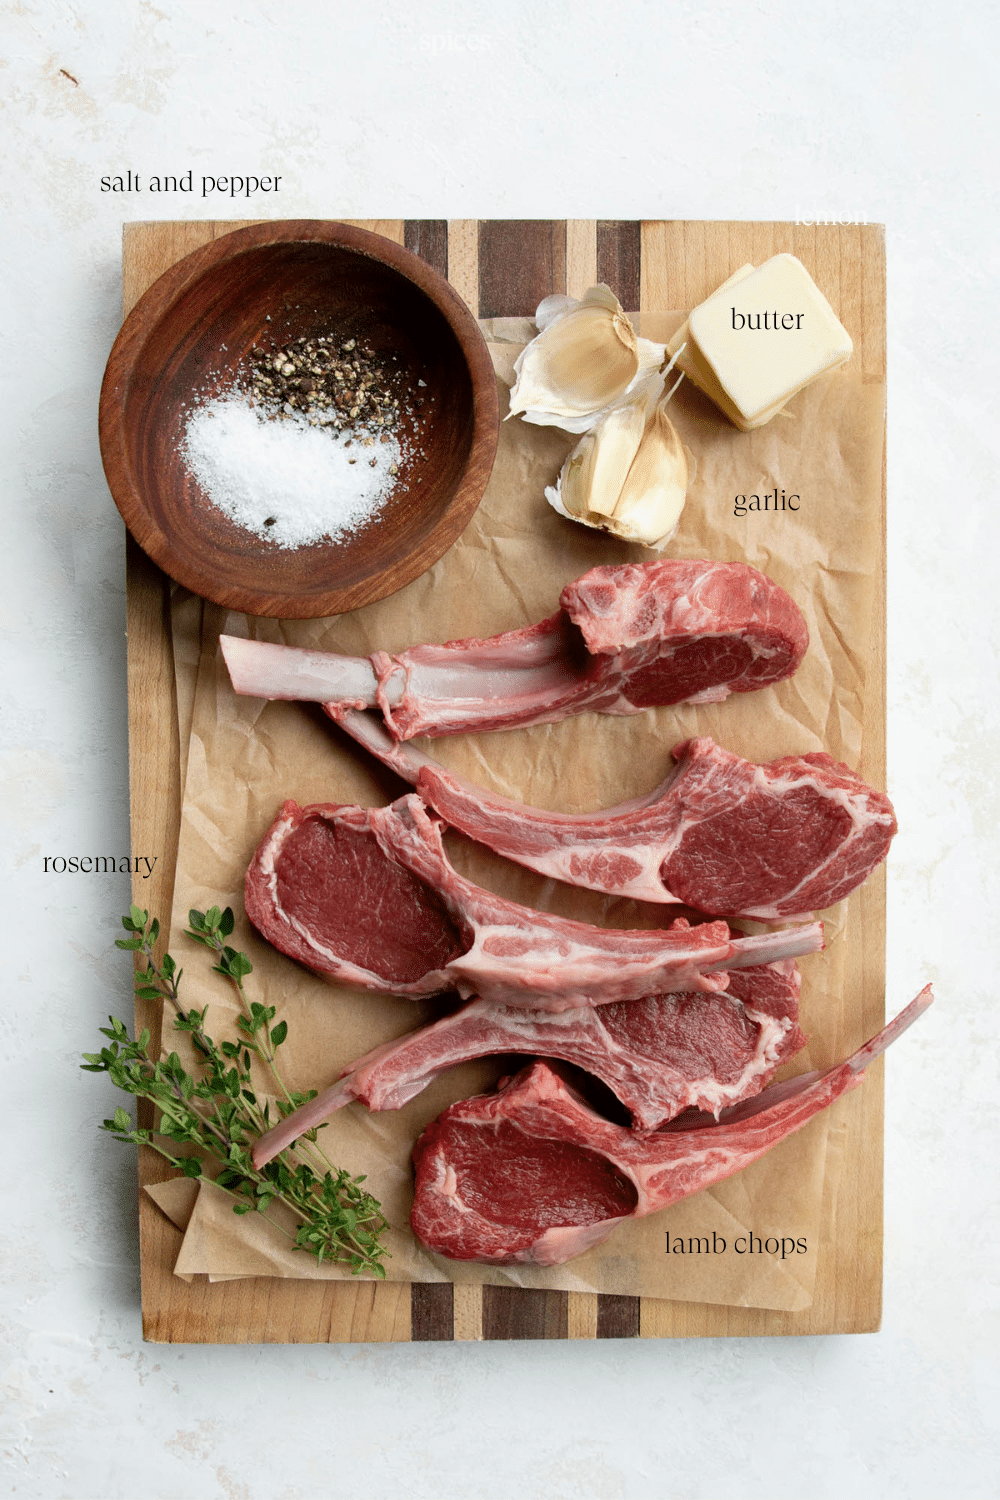 Ingredients to make lamb chops recipes. 